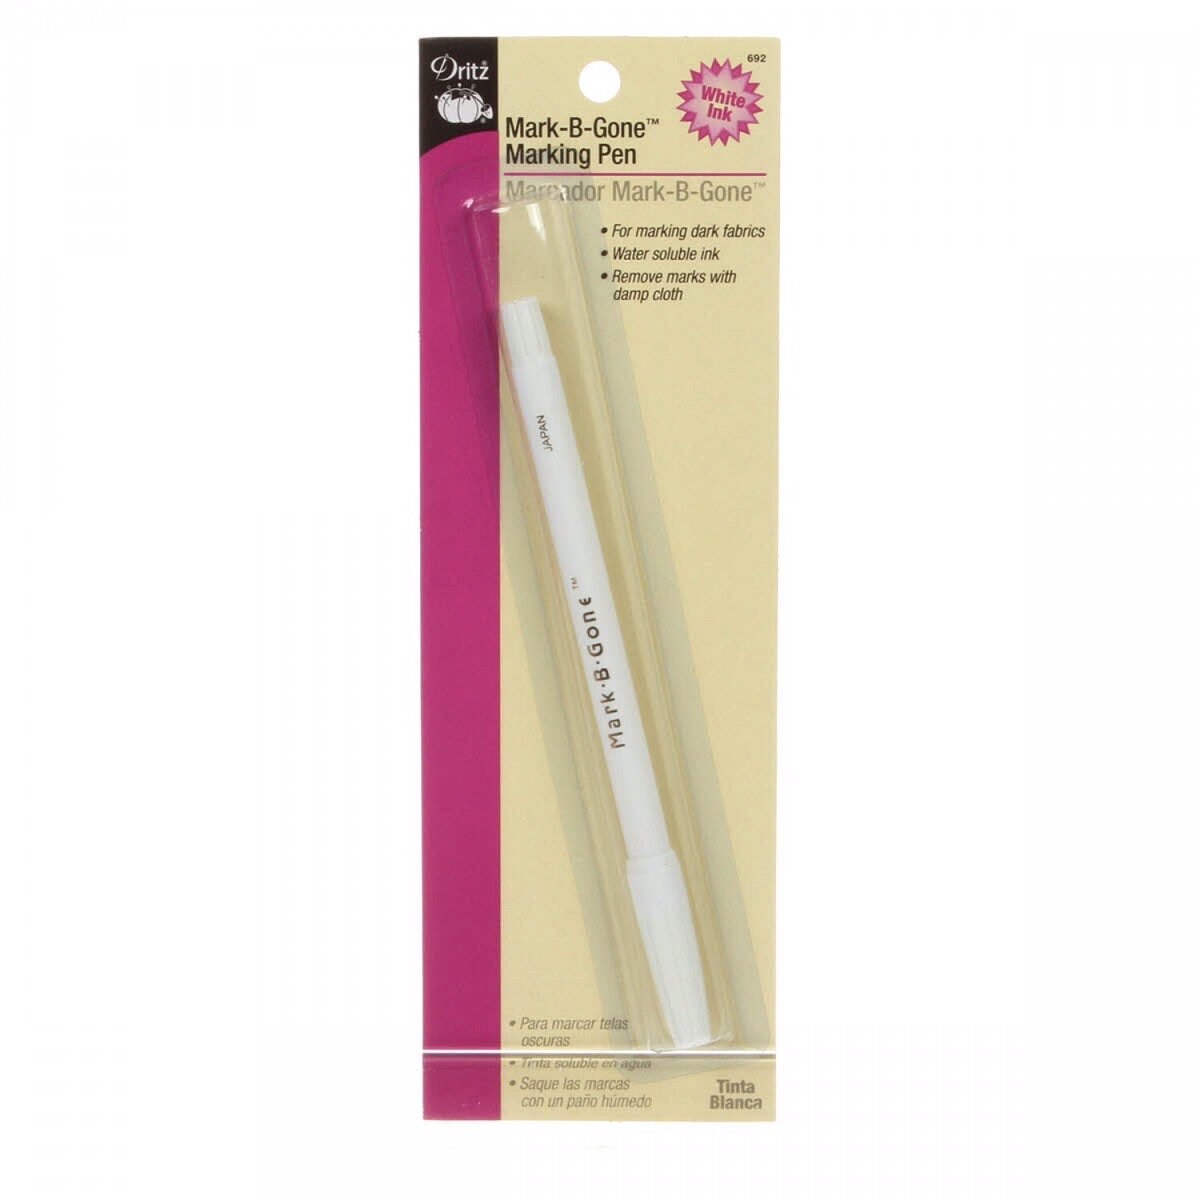 White Dritz Mark-b-gone Fabric Marking Pen. 1 White Fabric Marking Pen per  Package for Dark Fabrics. Water Soluble Ink. Dritz 692 